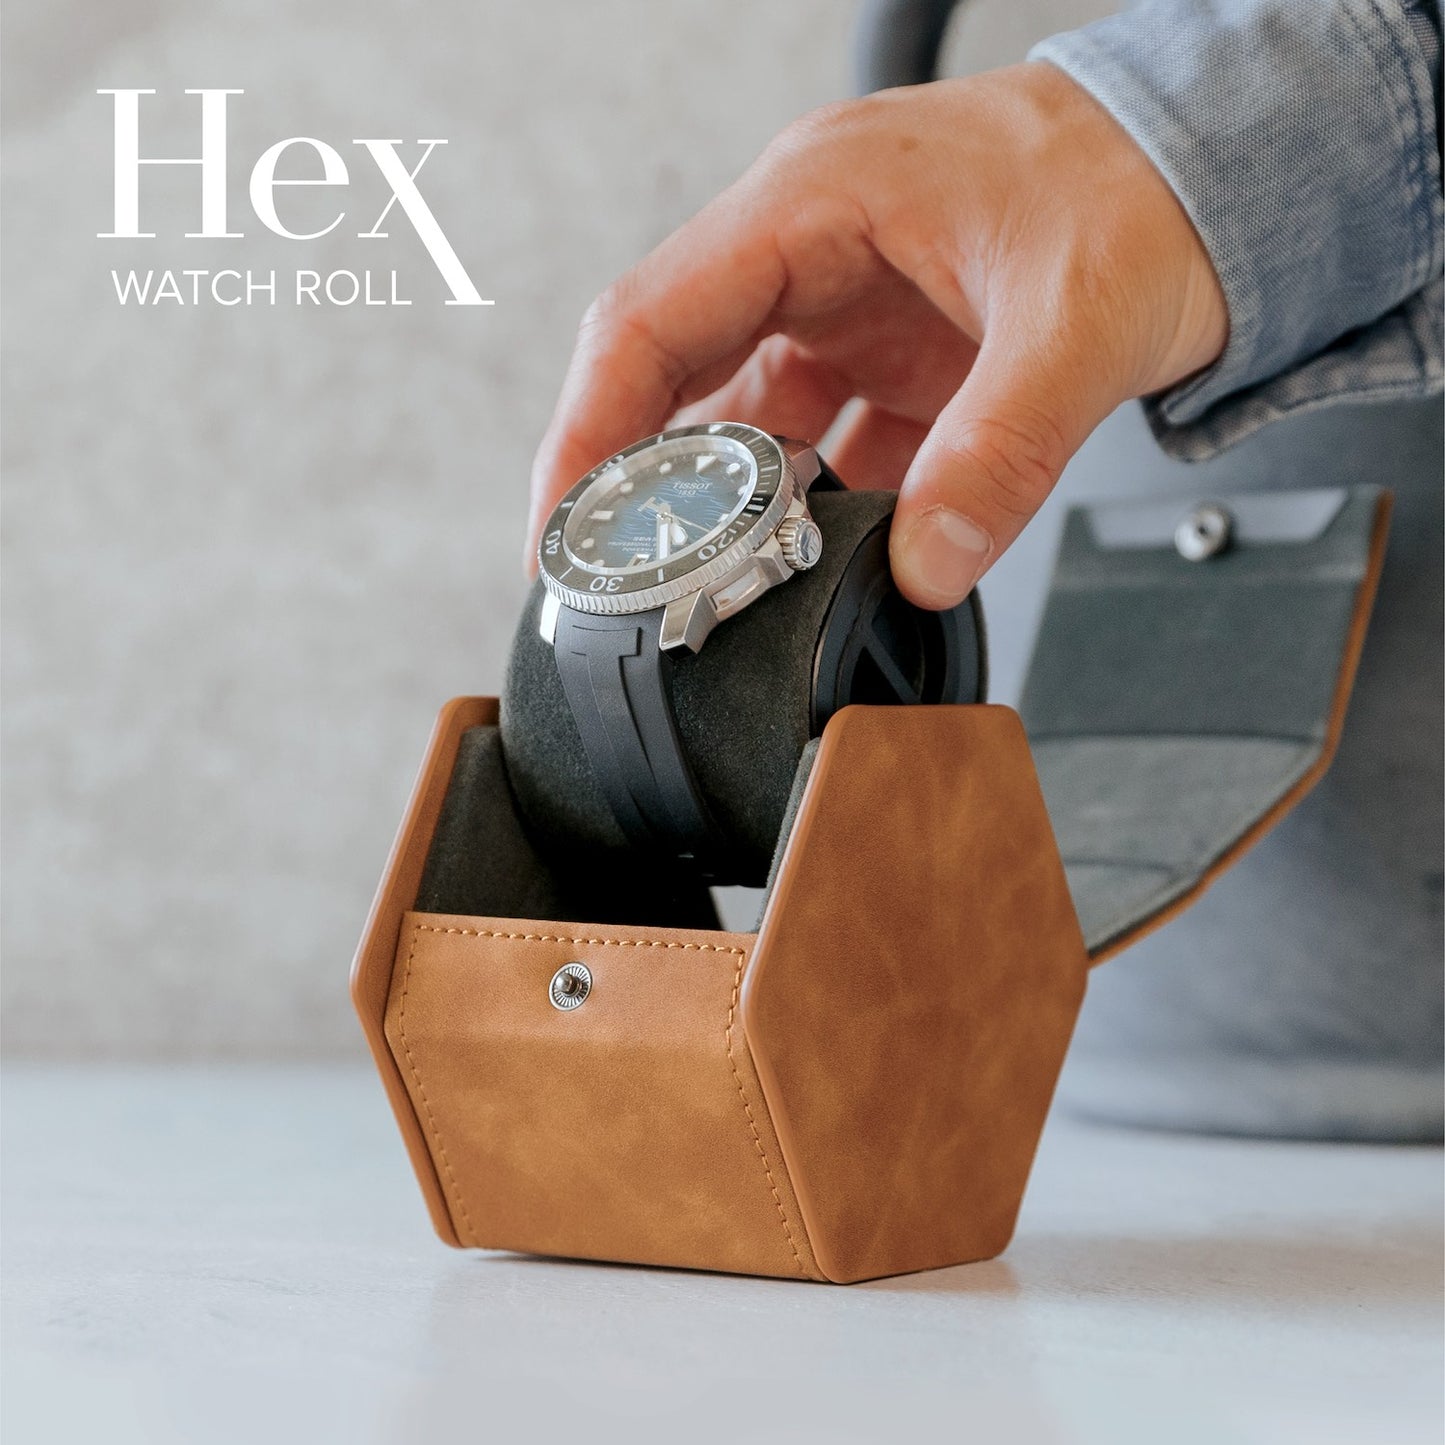 HEX Travel Watch Roll - 1 Slot